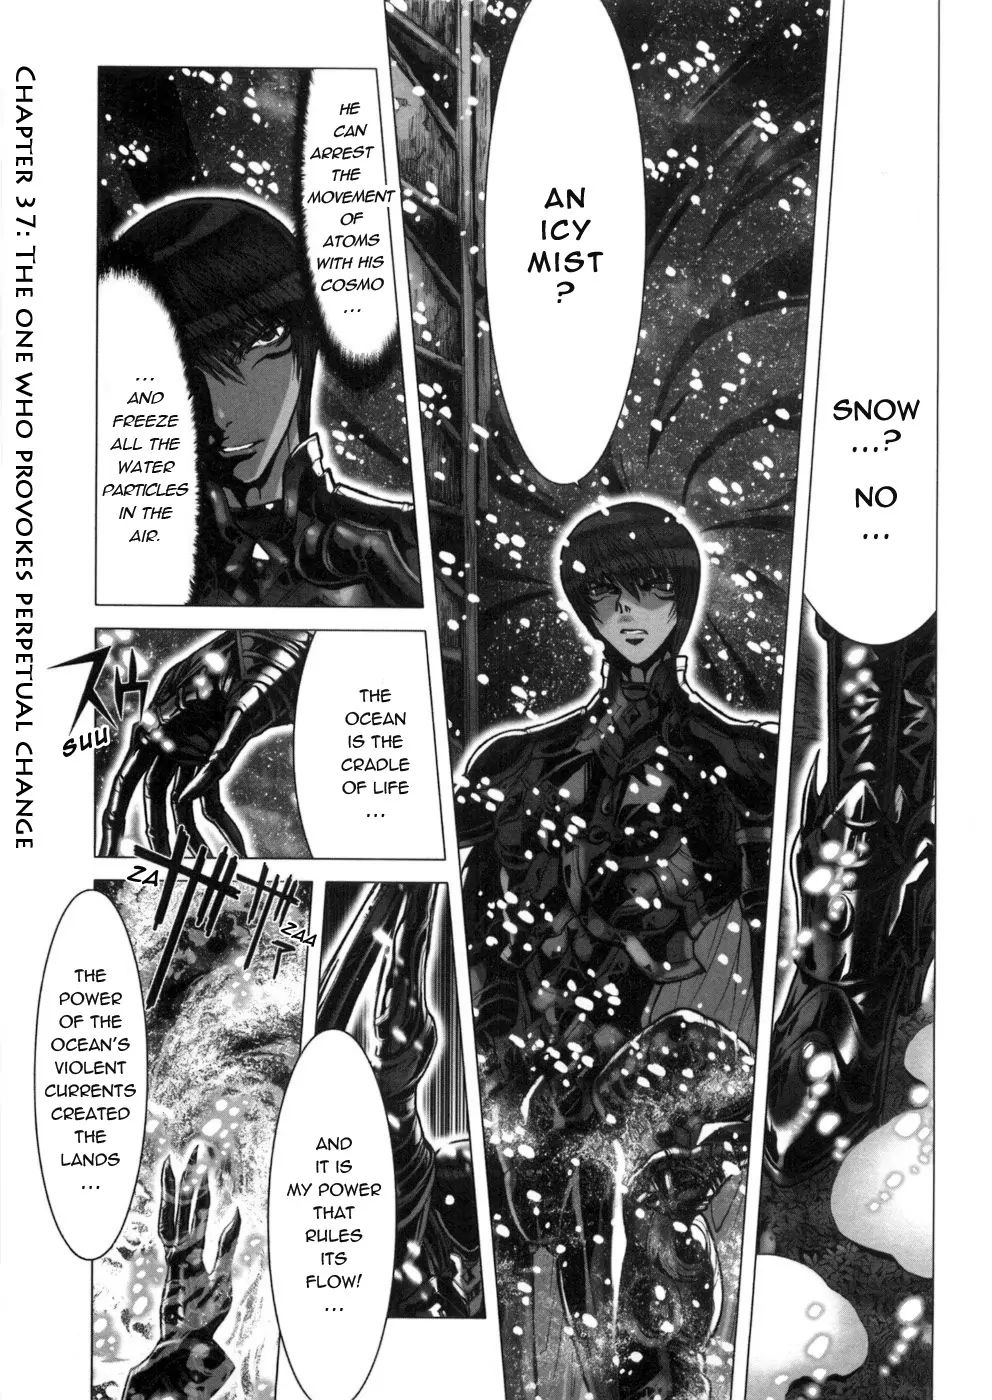 Saint Seiya Episode.g - Page 1